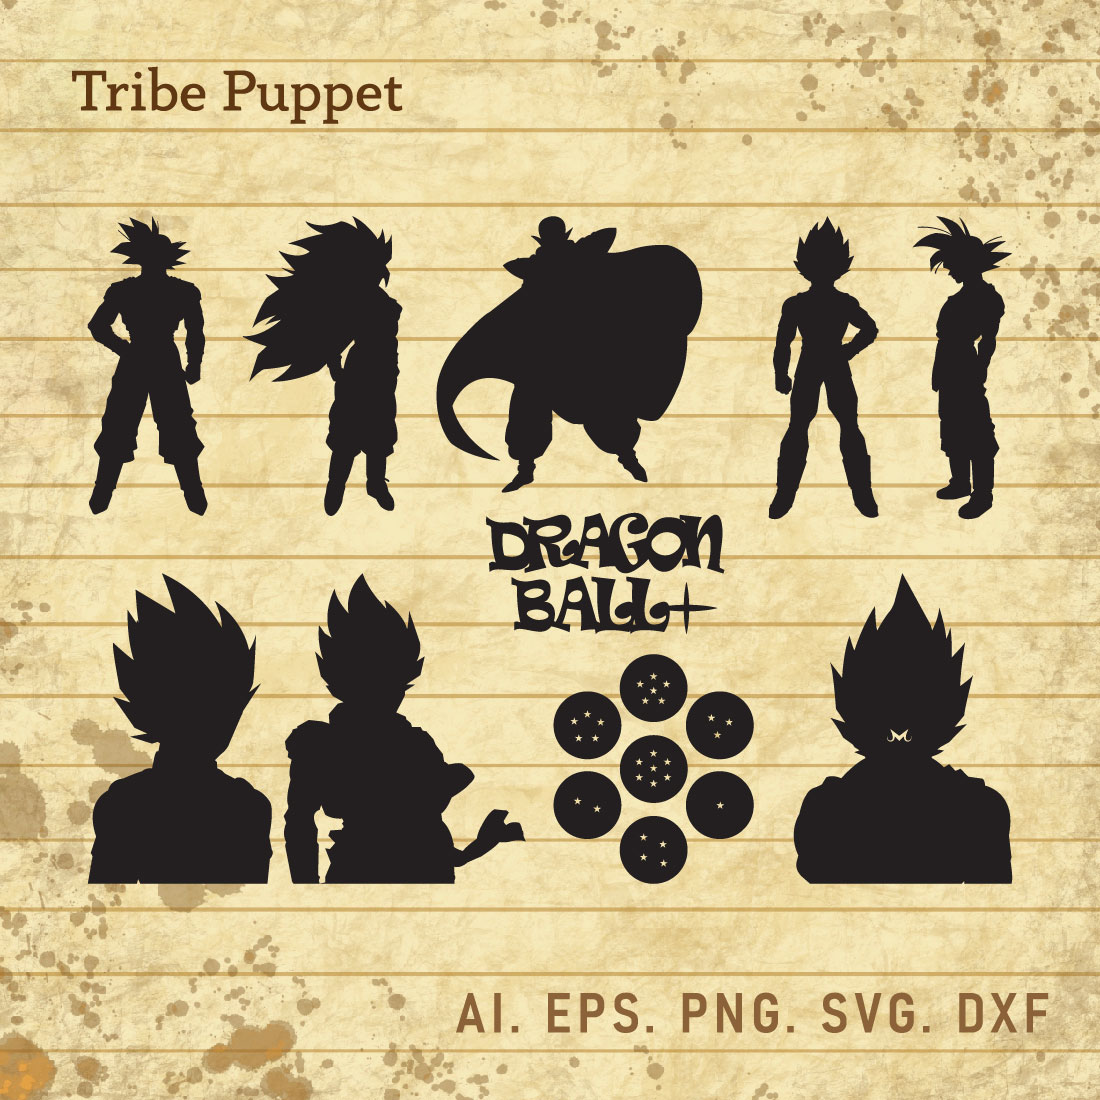 Dragon Ball Super Logo PNG Vector (EPS) Free Download